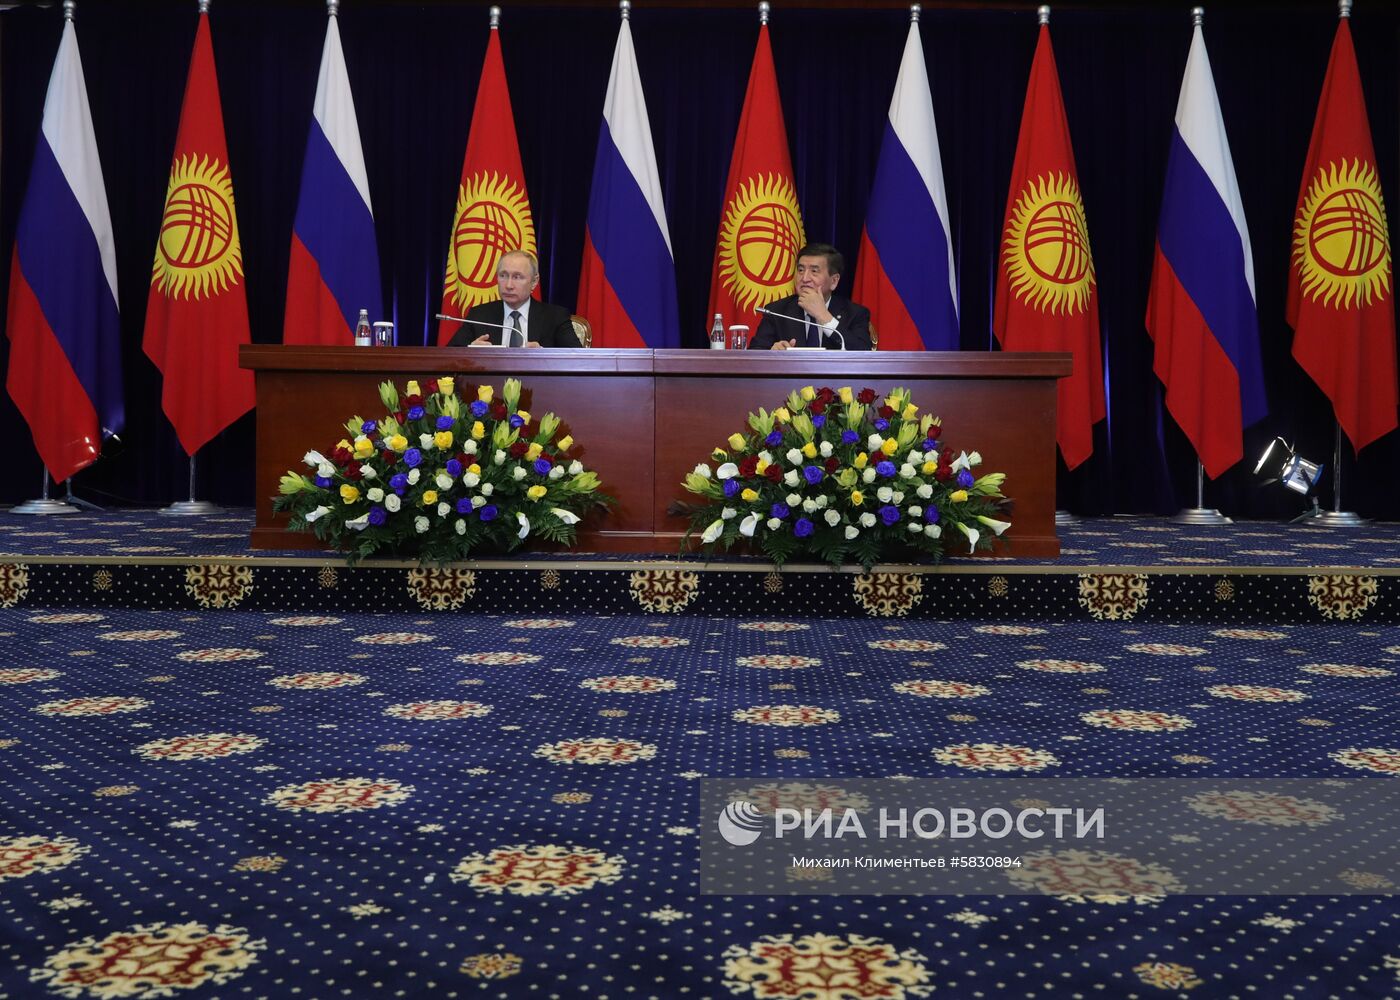 Государственный визит президента РФ В. Путина в Киргизию